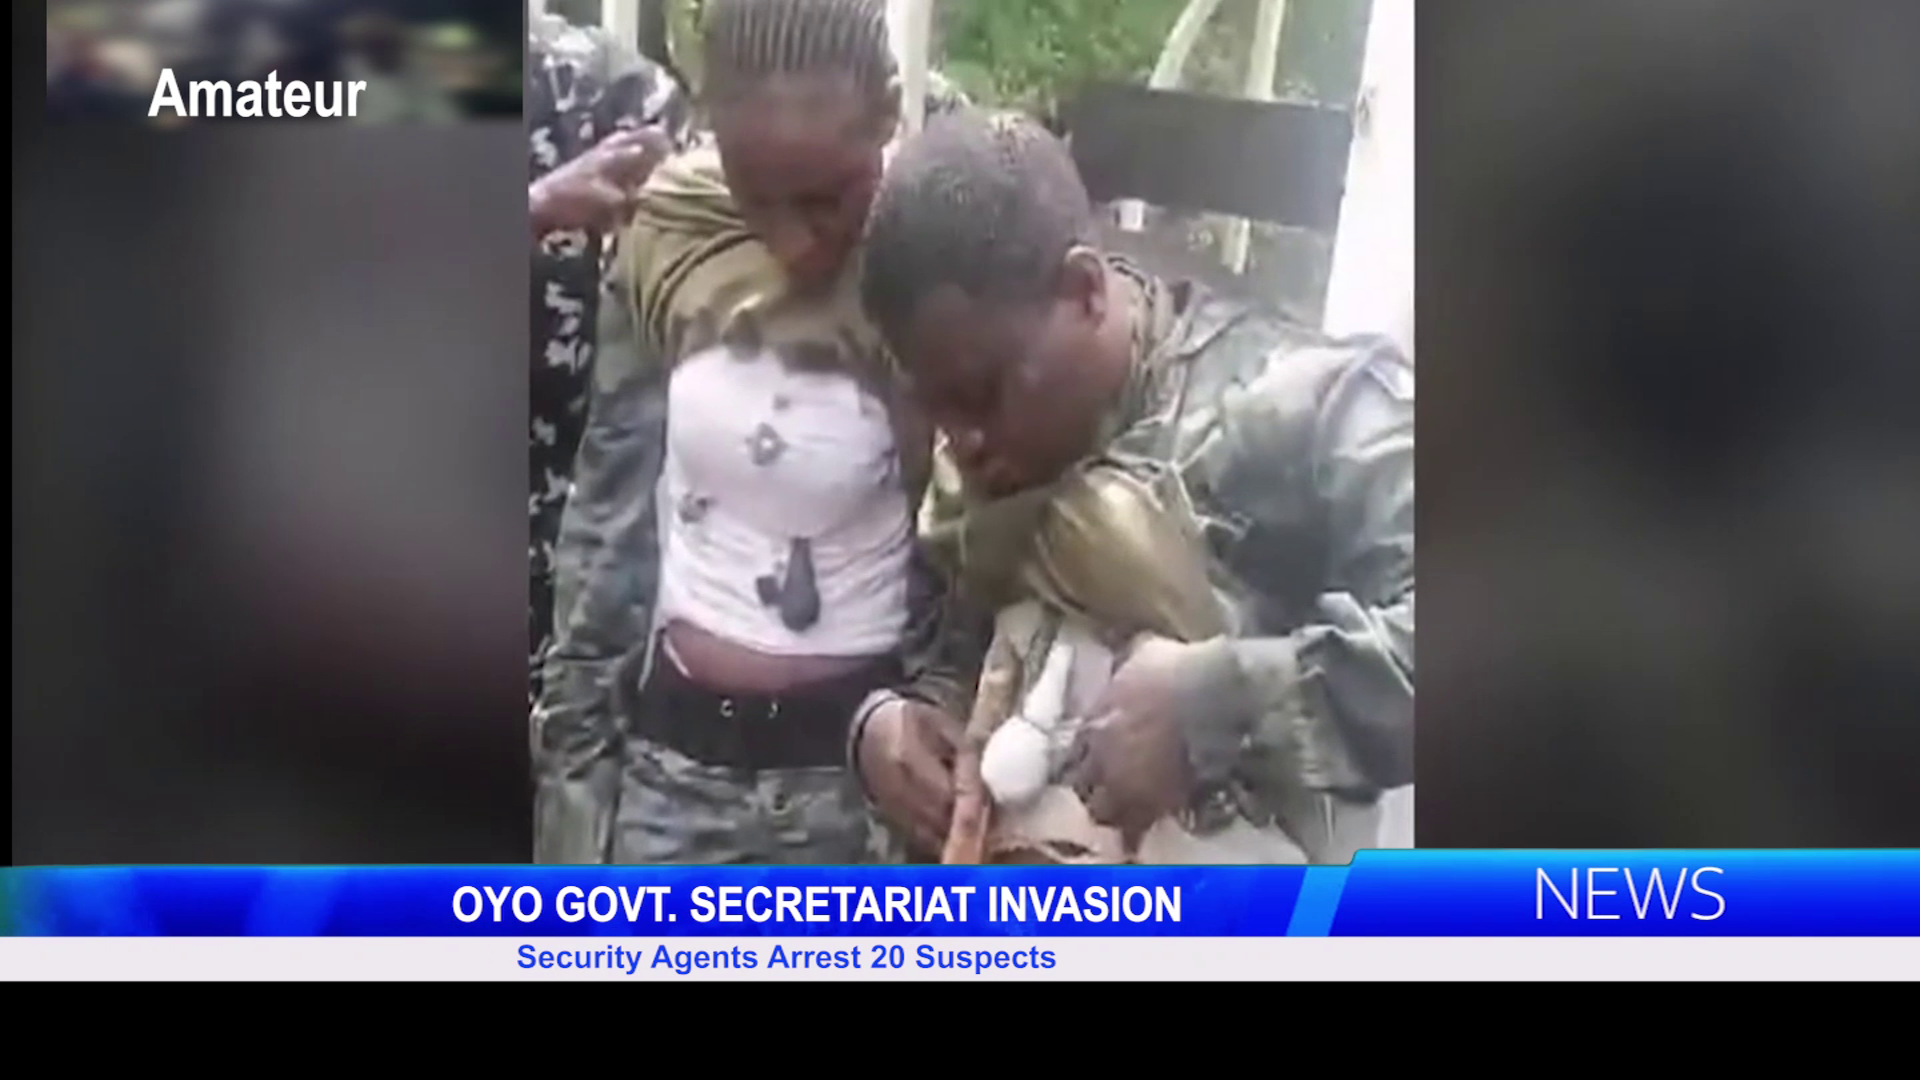 Oyo Govt. Secretariat Invasion: Security Agents Arrest 20 Suspects